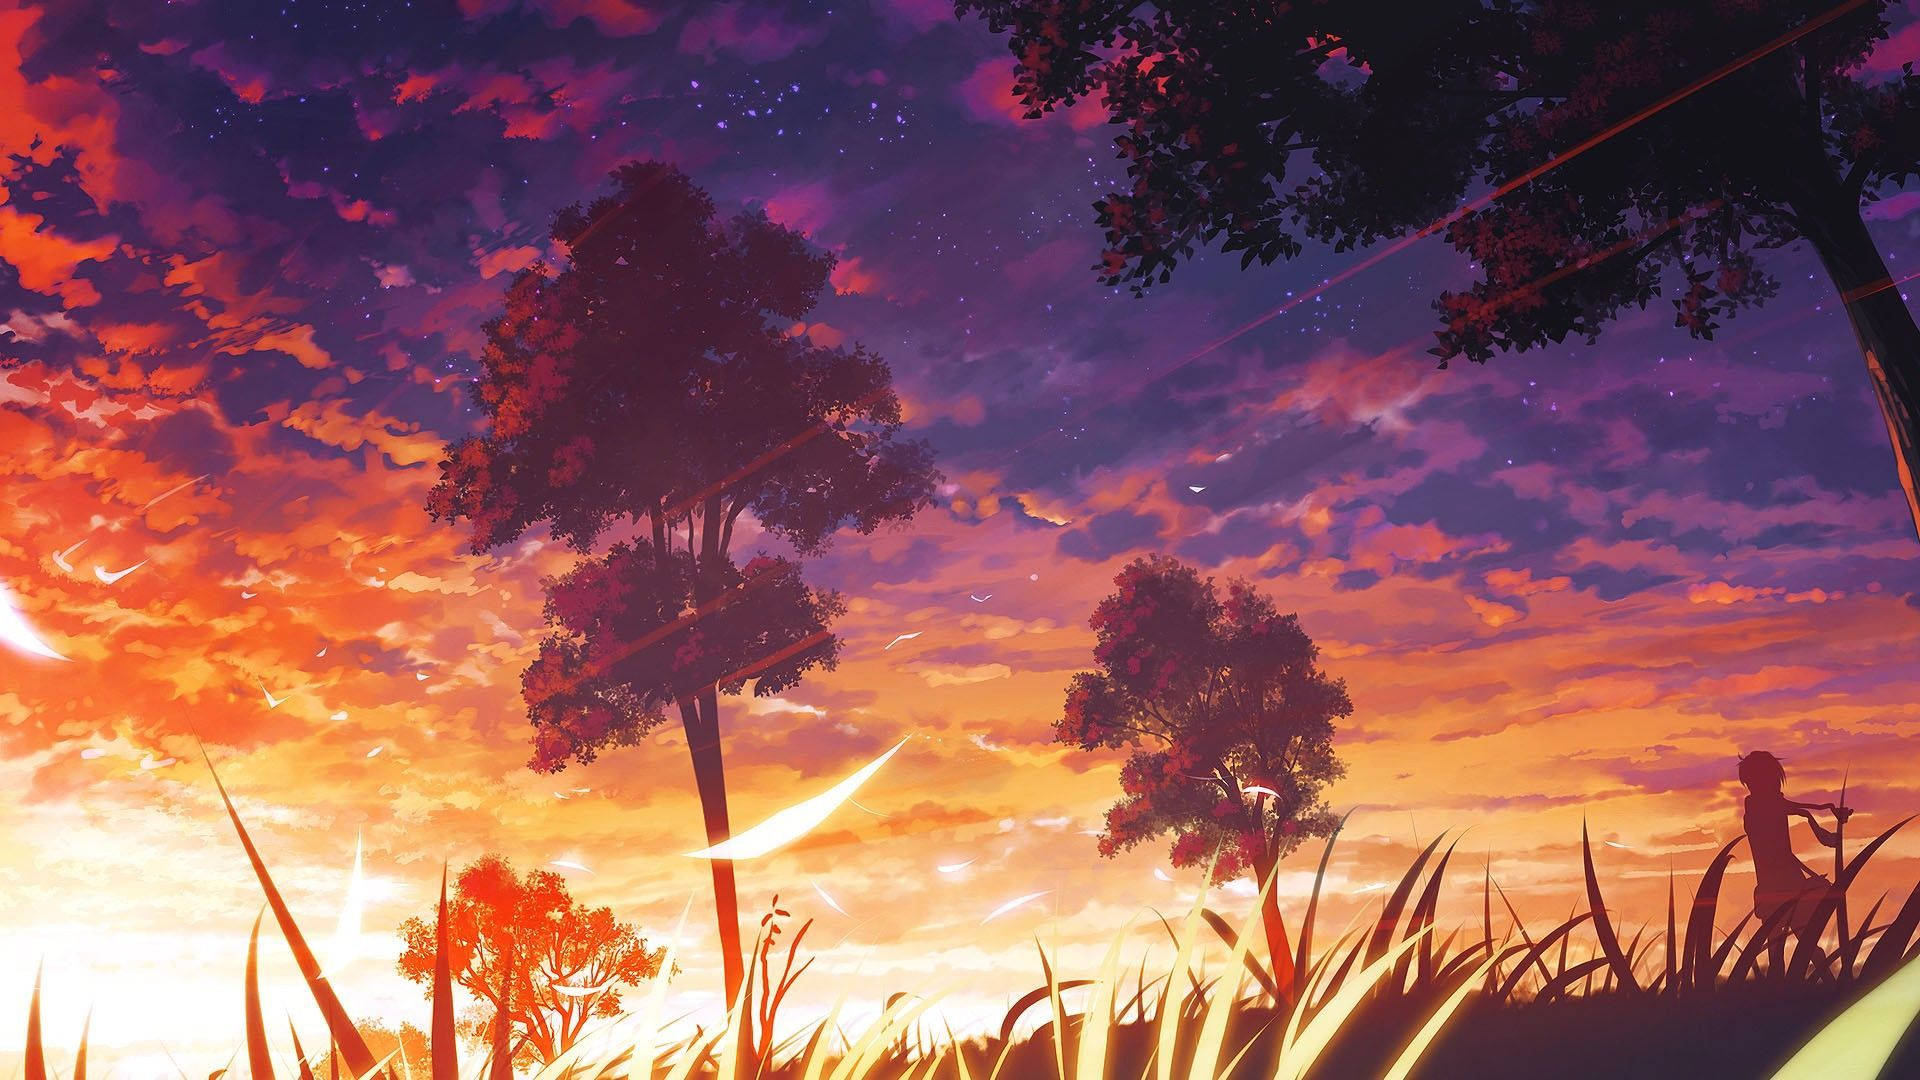 Artistic anime wallpaper background for your desktop